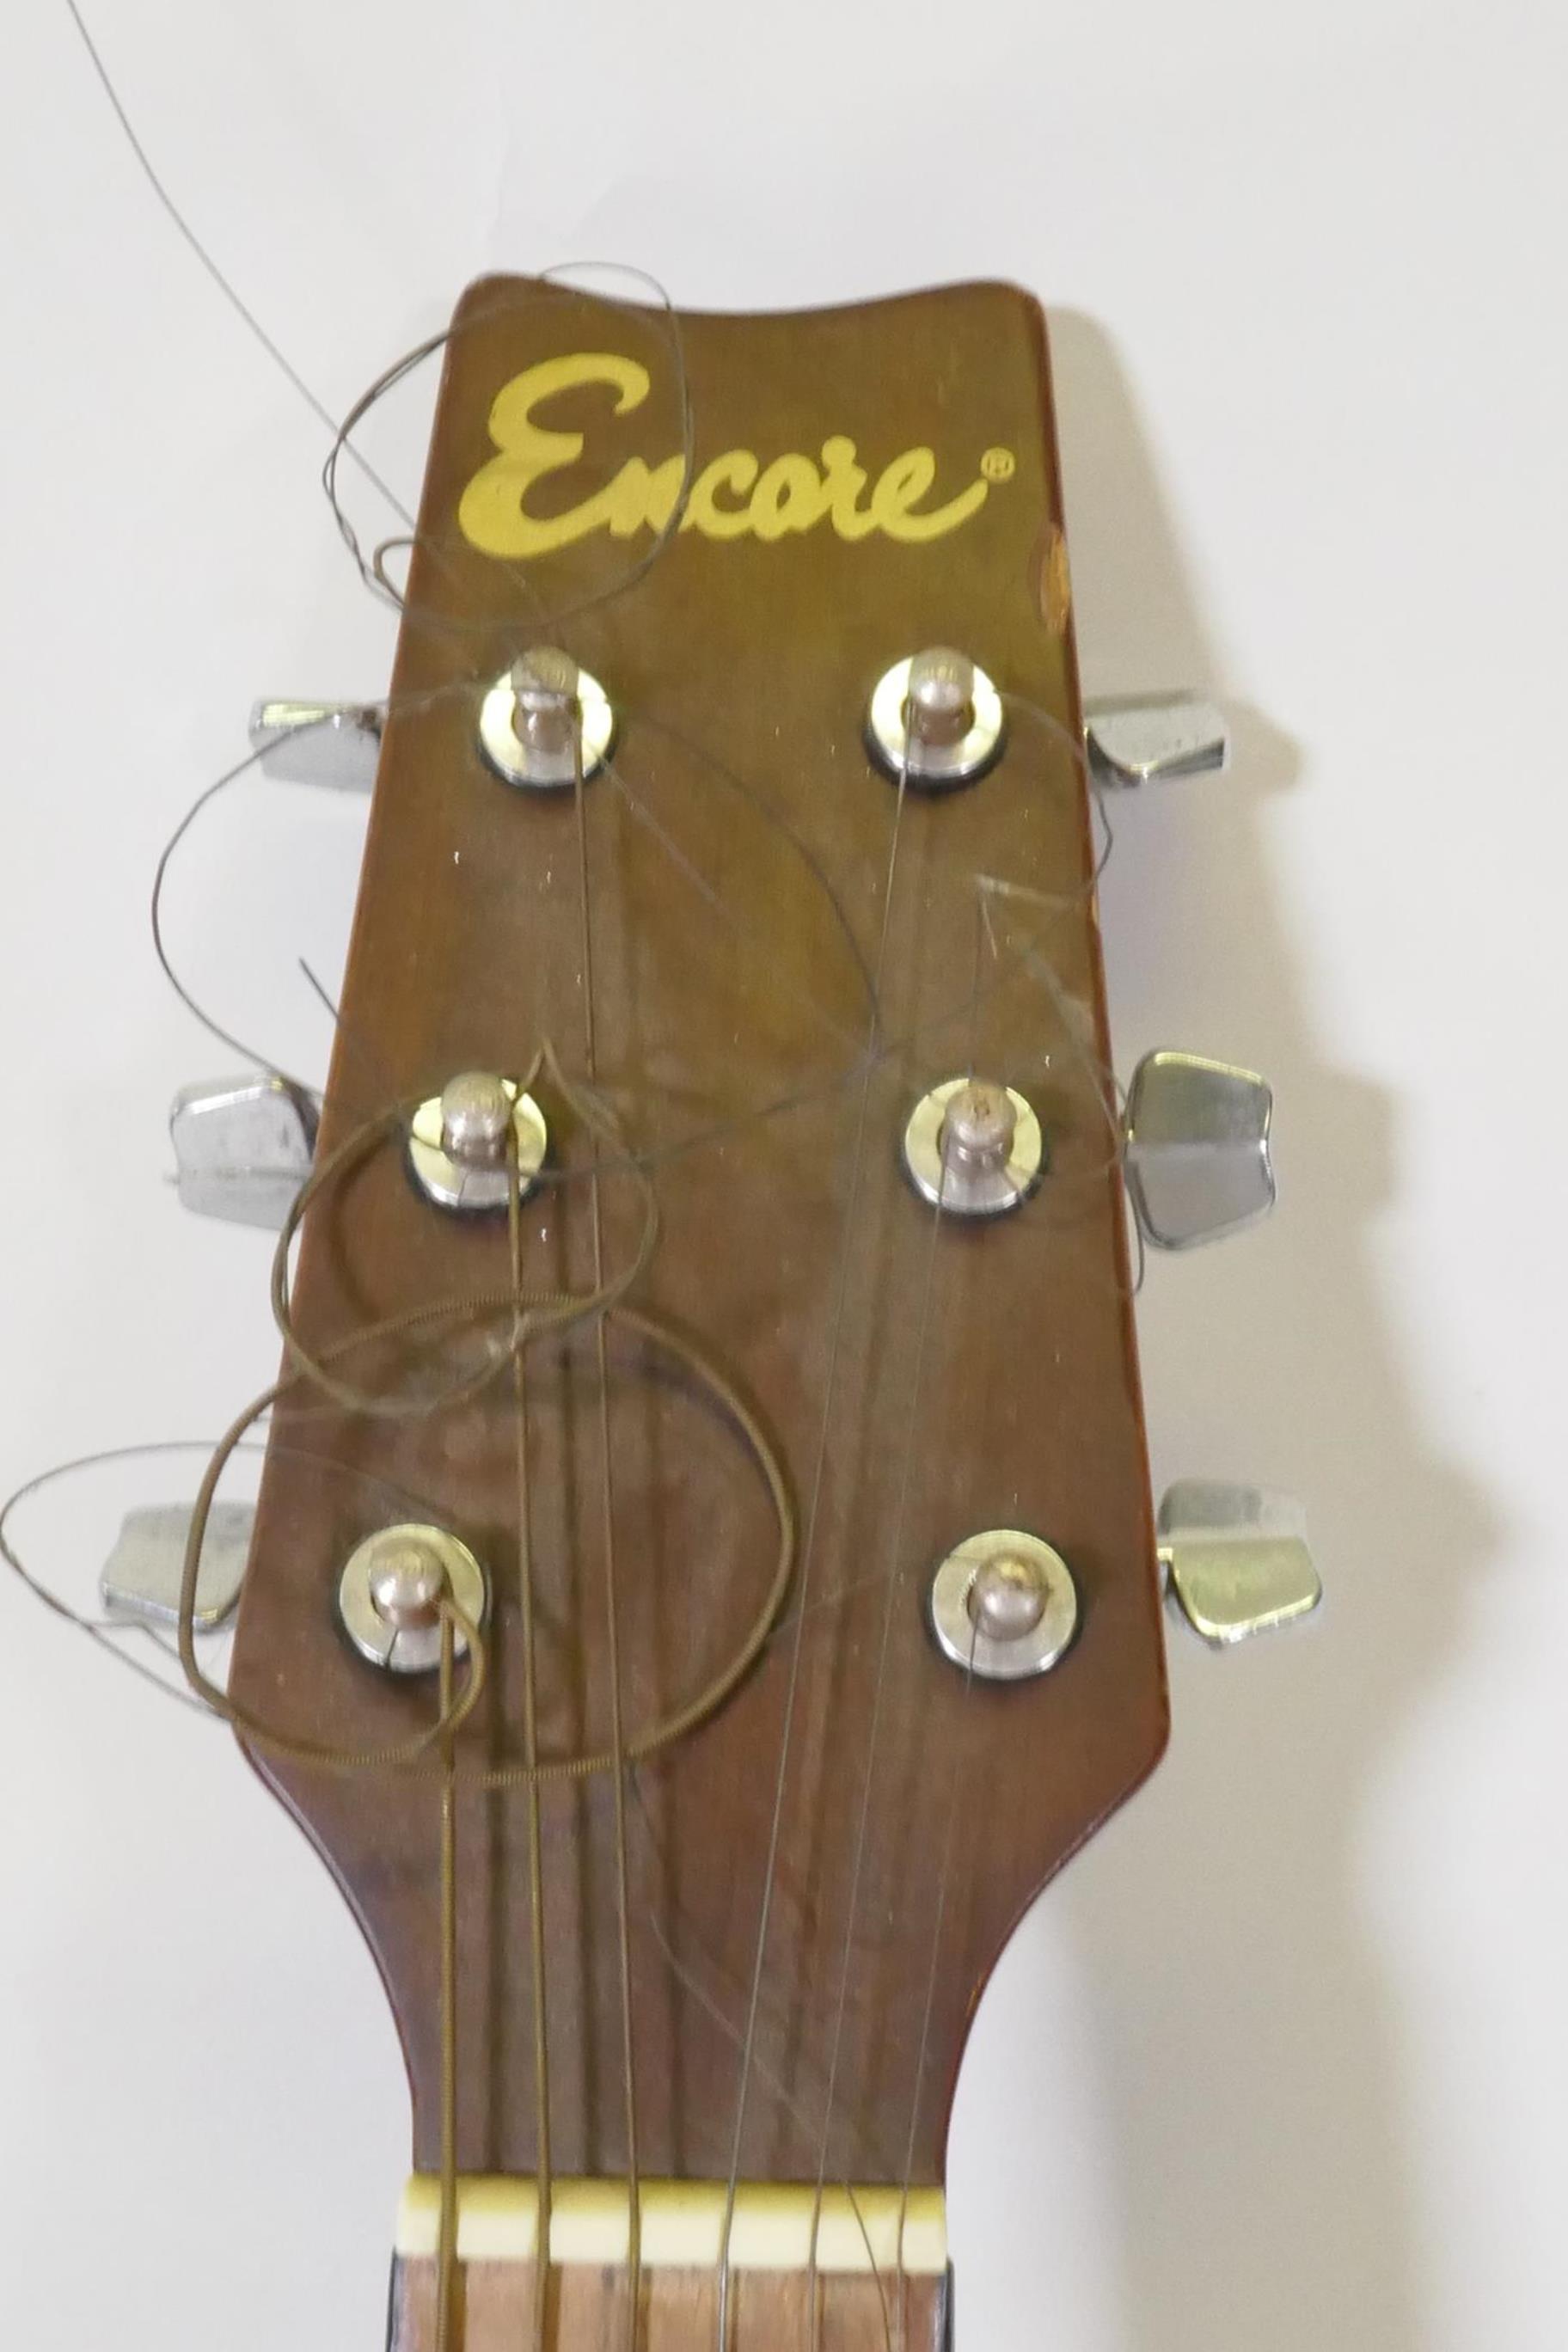 Encore model No W350N acoustic guitar by John Hornby Sheives & Co Ltd - Image 2 of 4